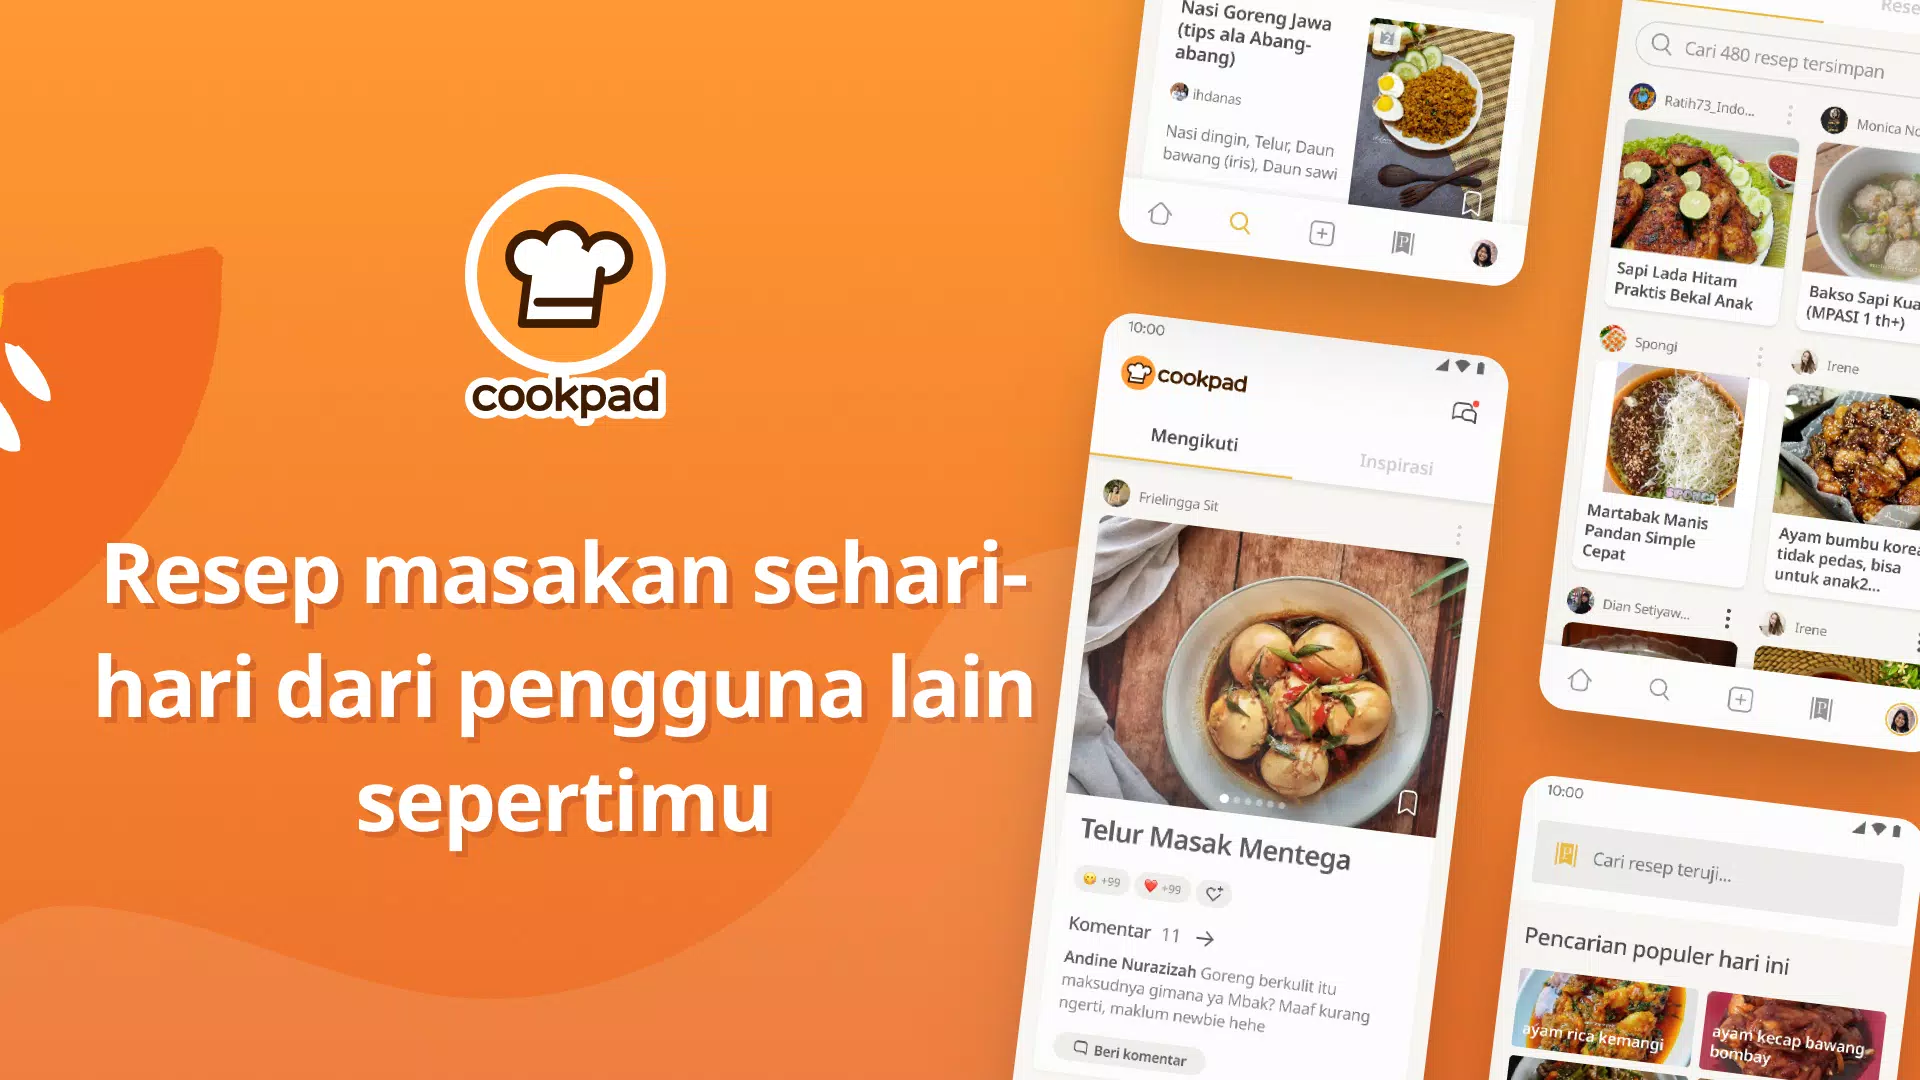 Cookpad APK untuk Unduhan Android